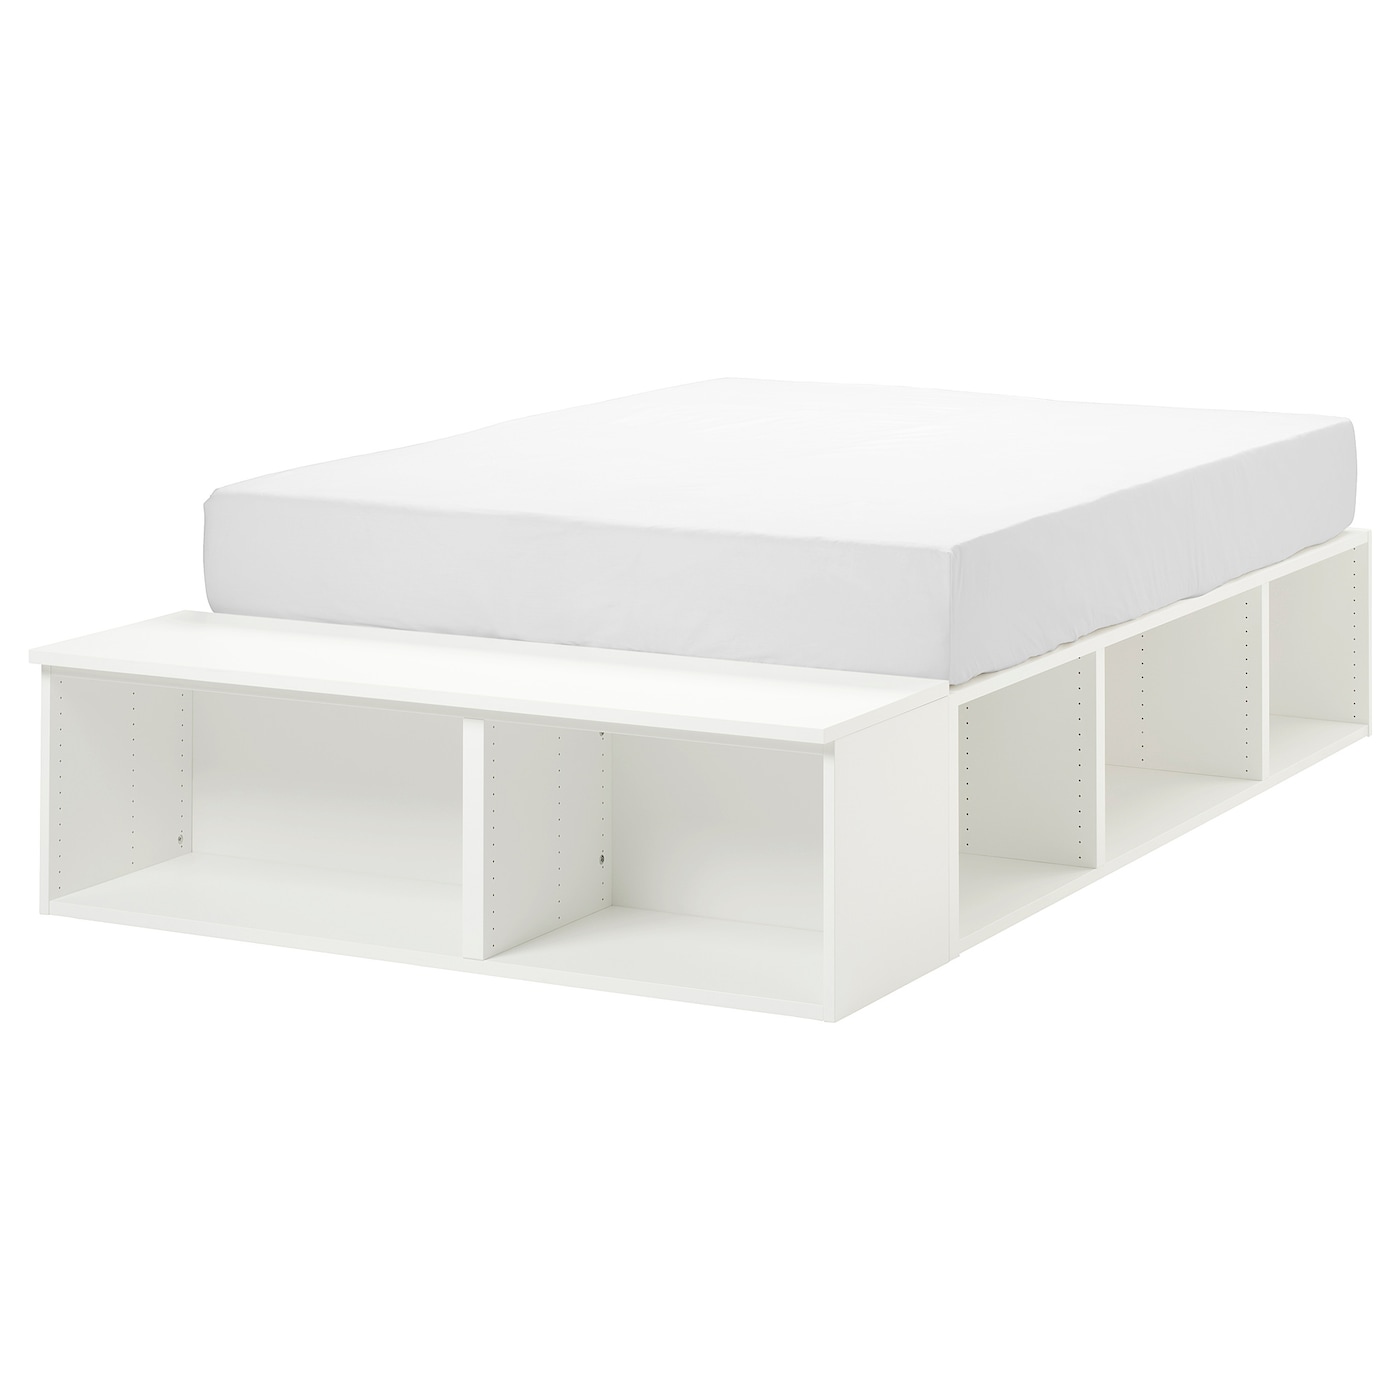 Каркас кровати со шкафами - IKEA PLATSA, 200х140 см, белый, ПЛАТСА ИКЕА